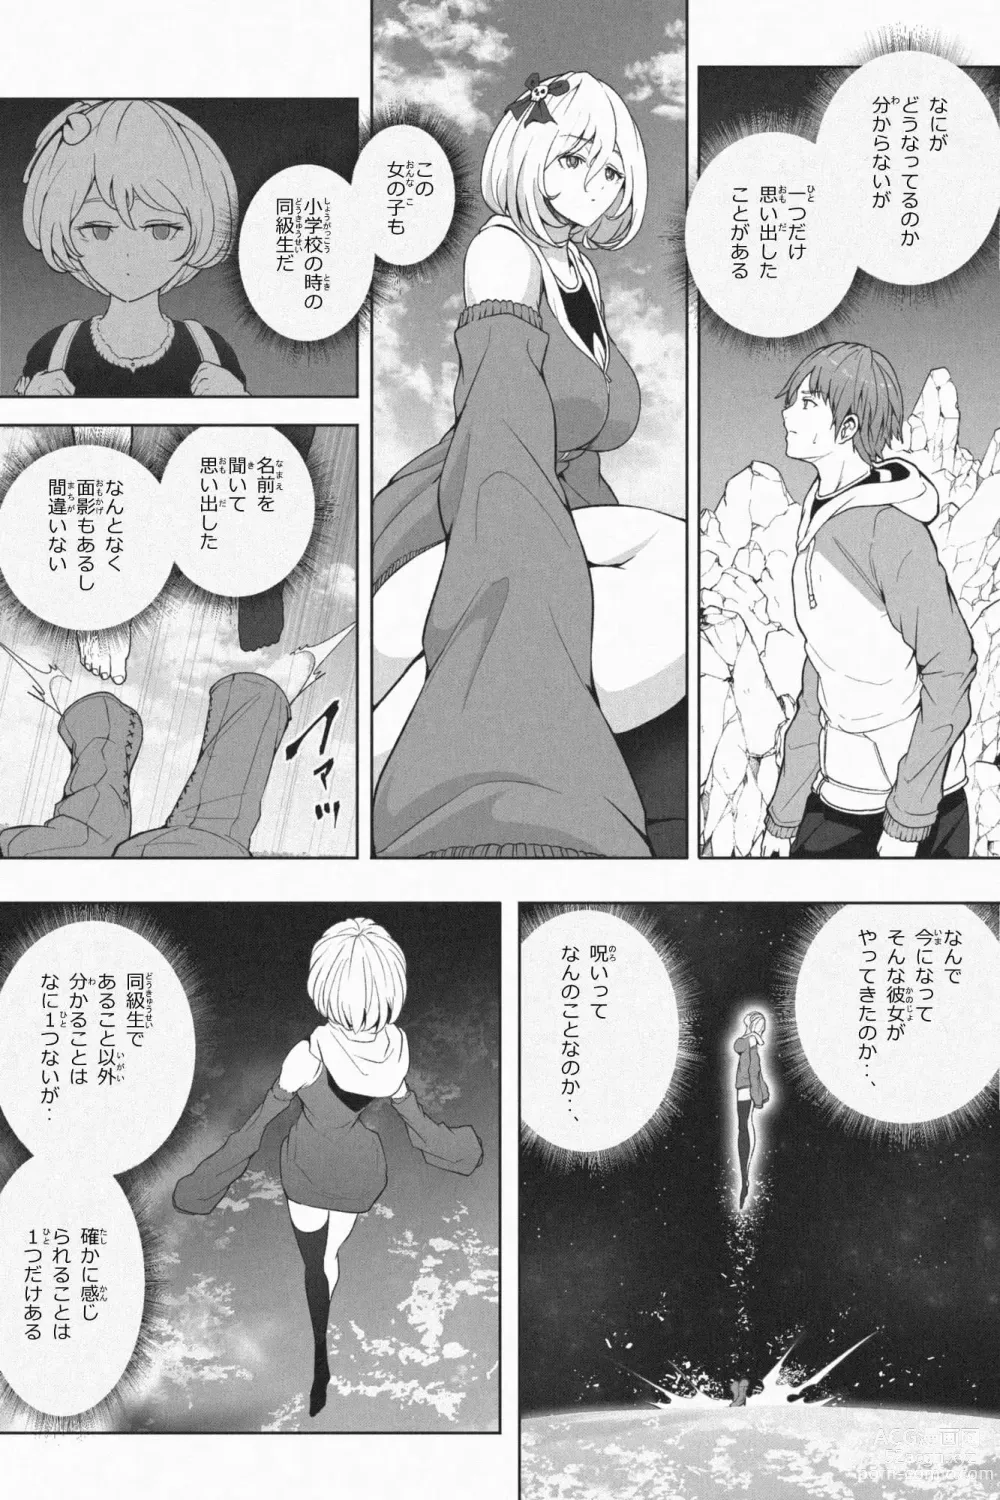 Page 9 of doujinshi Yandere Giga Kanojo 2